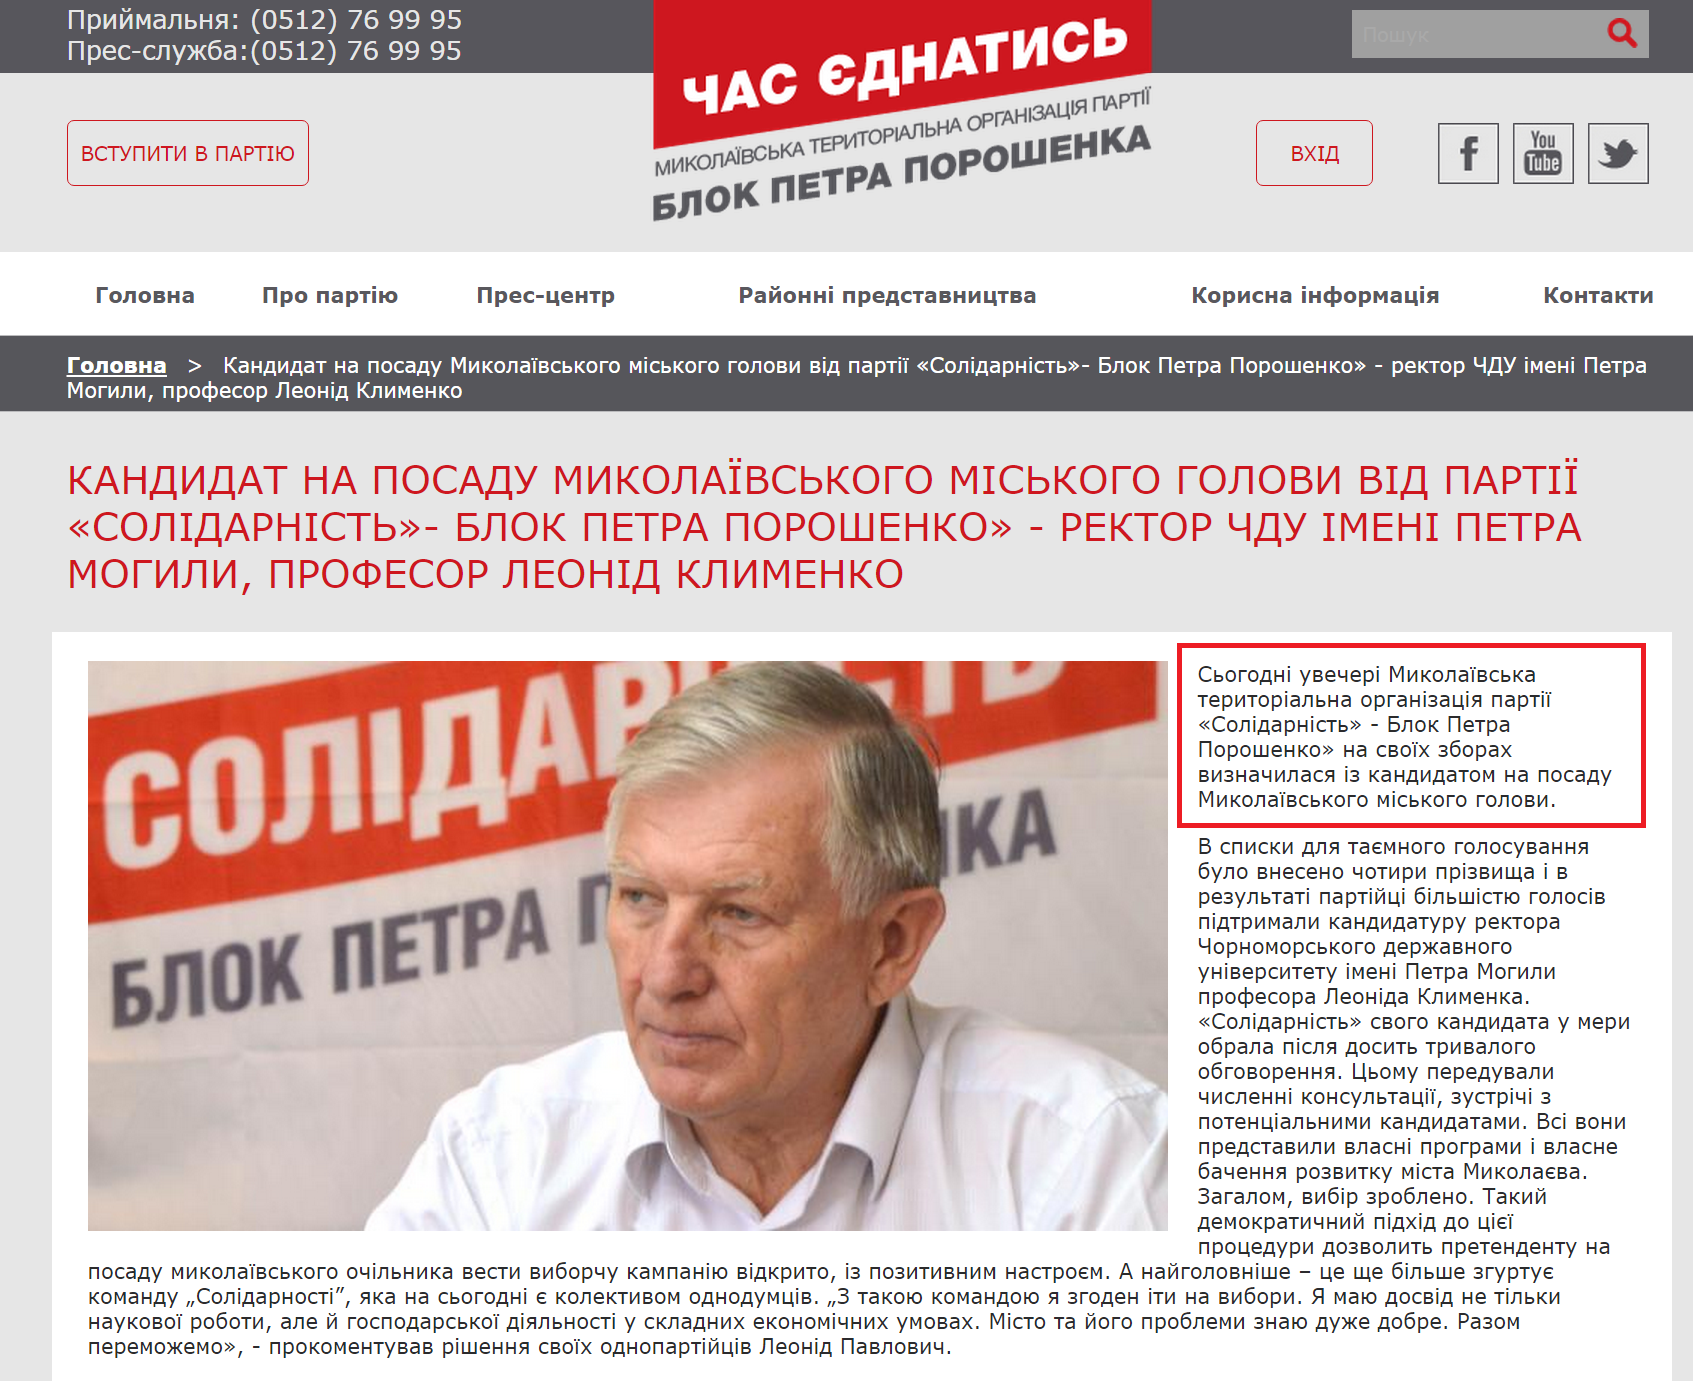 http://solydarnist.mk.ua/press-center/kandydat-na-posadu-mykolayivskogo-miskogo-golovy-vid-partiyi-solidarnist-blok-petra